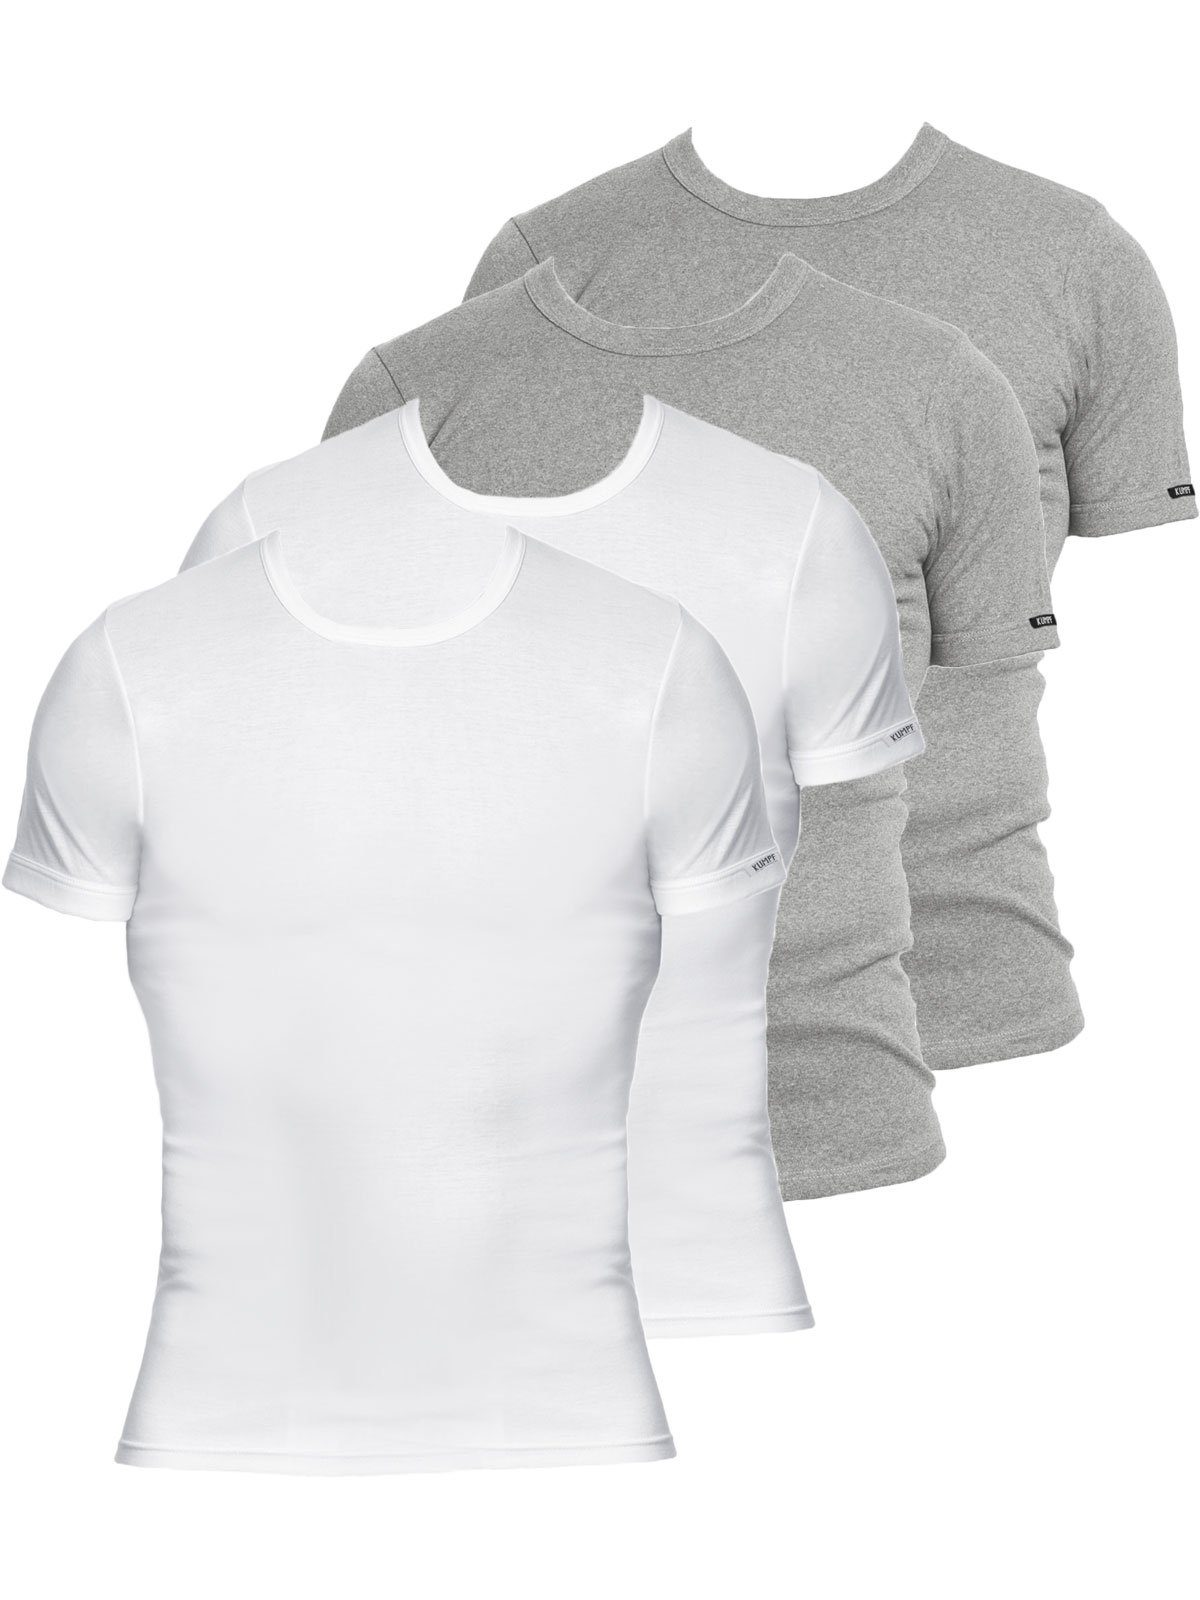 KUMPF Unterziehshirt 4er Sparpack (Spar-Set, T-Shirt 4-St) Markenqualität hohe Cotton weiss Herren Bio stahlgrau-melange